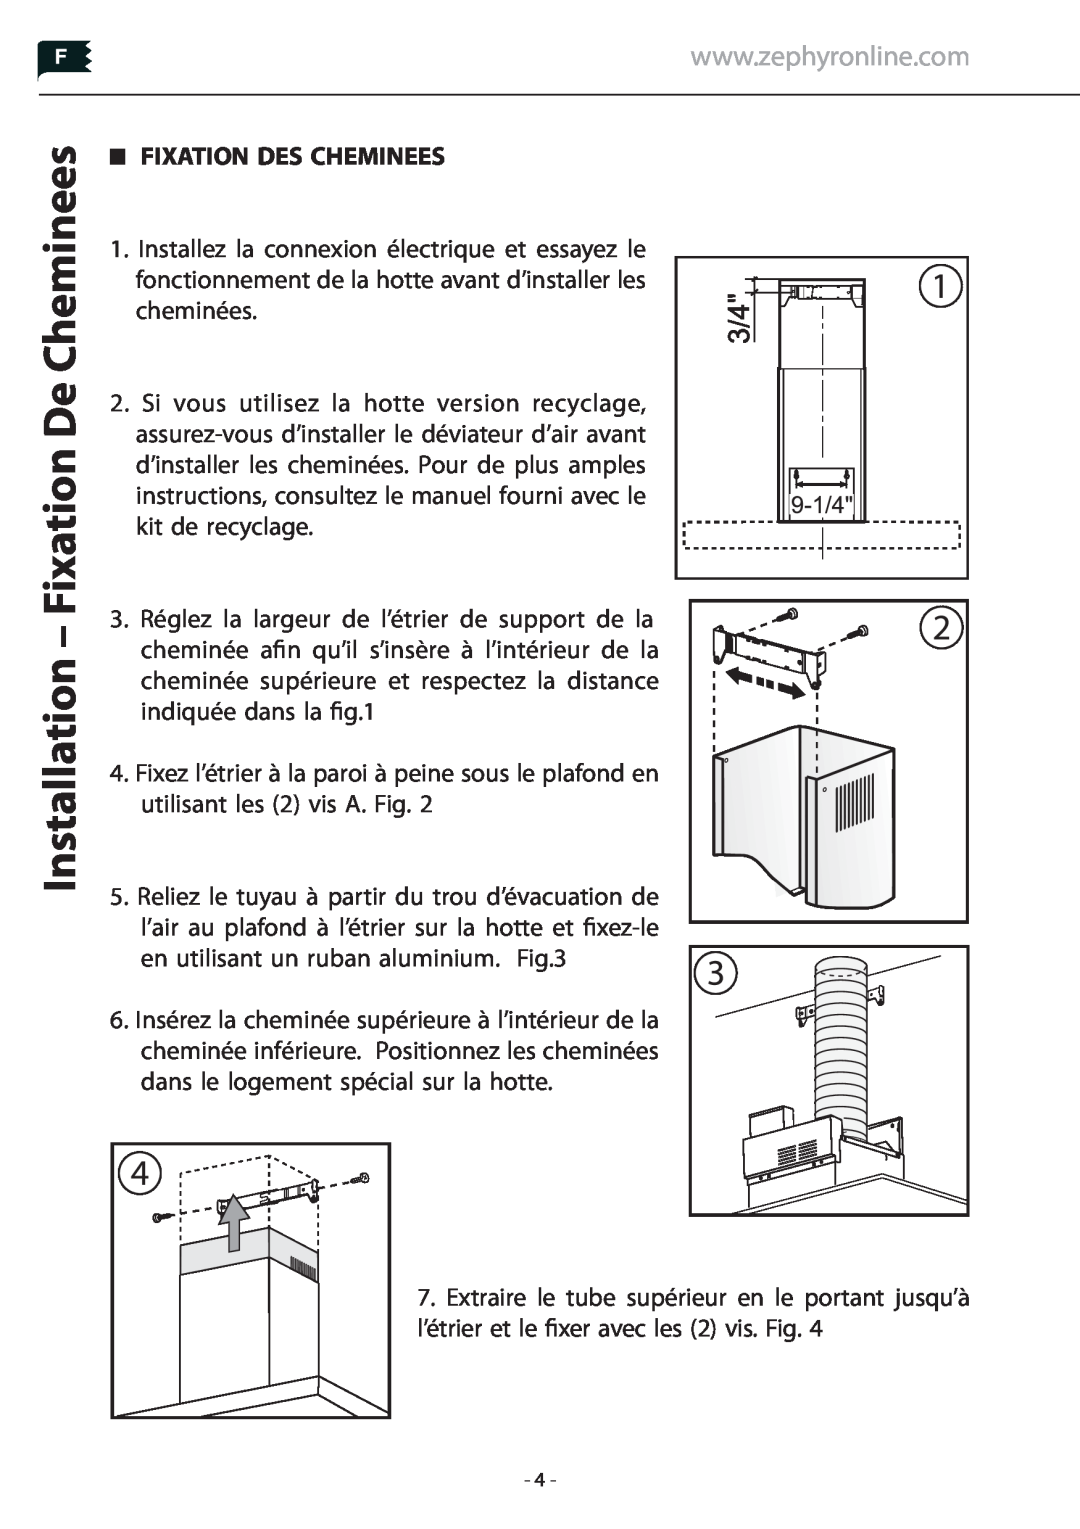 Zephyr Z1C-00LA manual Installation - Fixation De Cheminees, Fixation Des Cheminees 